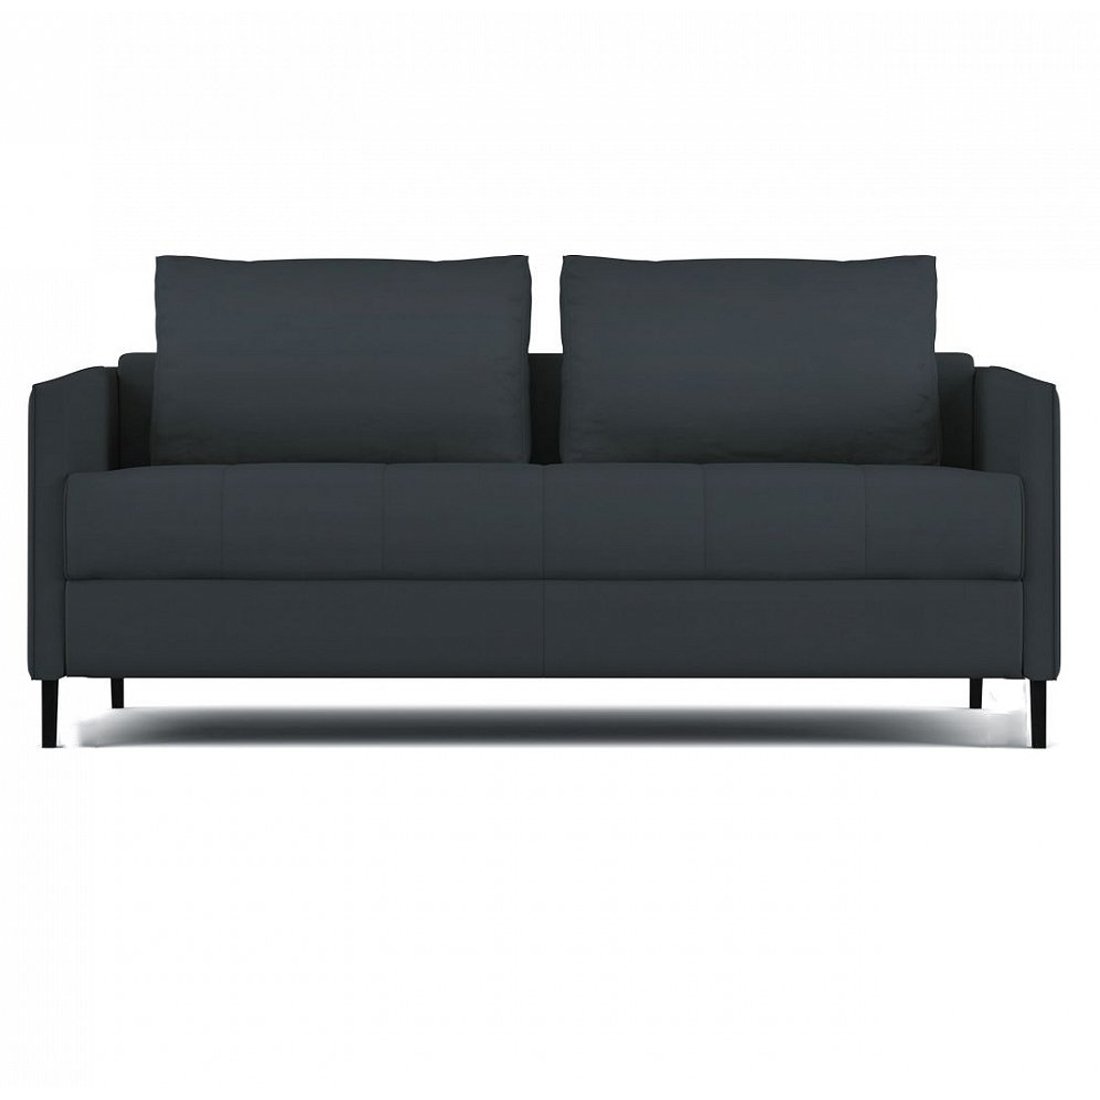 Torque India Rebecca 2 Seater Fabric Sofa For Living Room (Dark Grey) - TorqueIndia